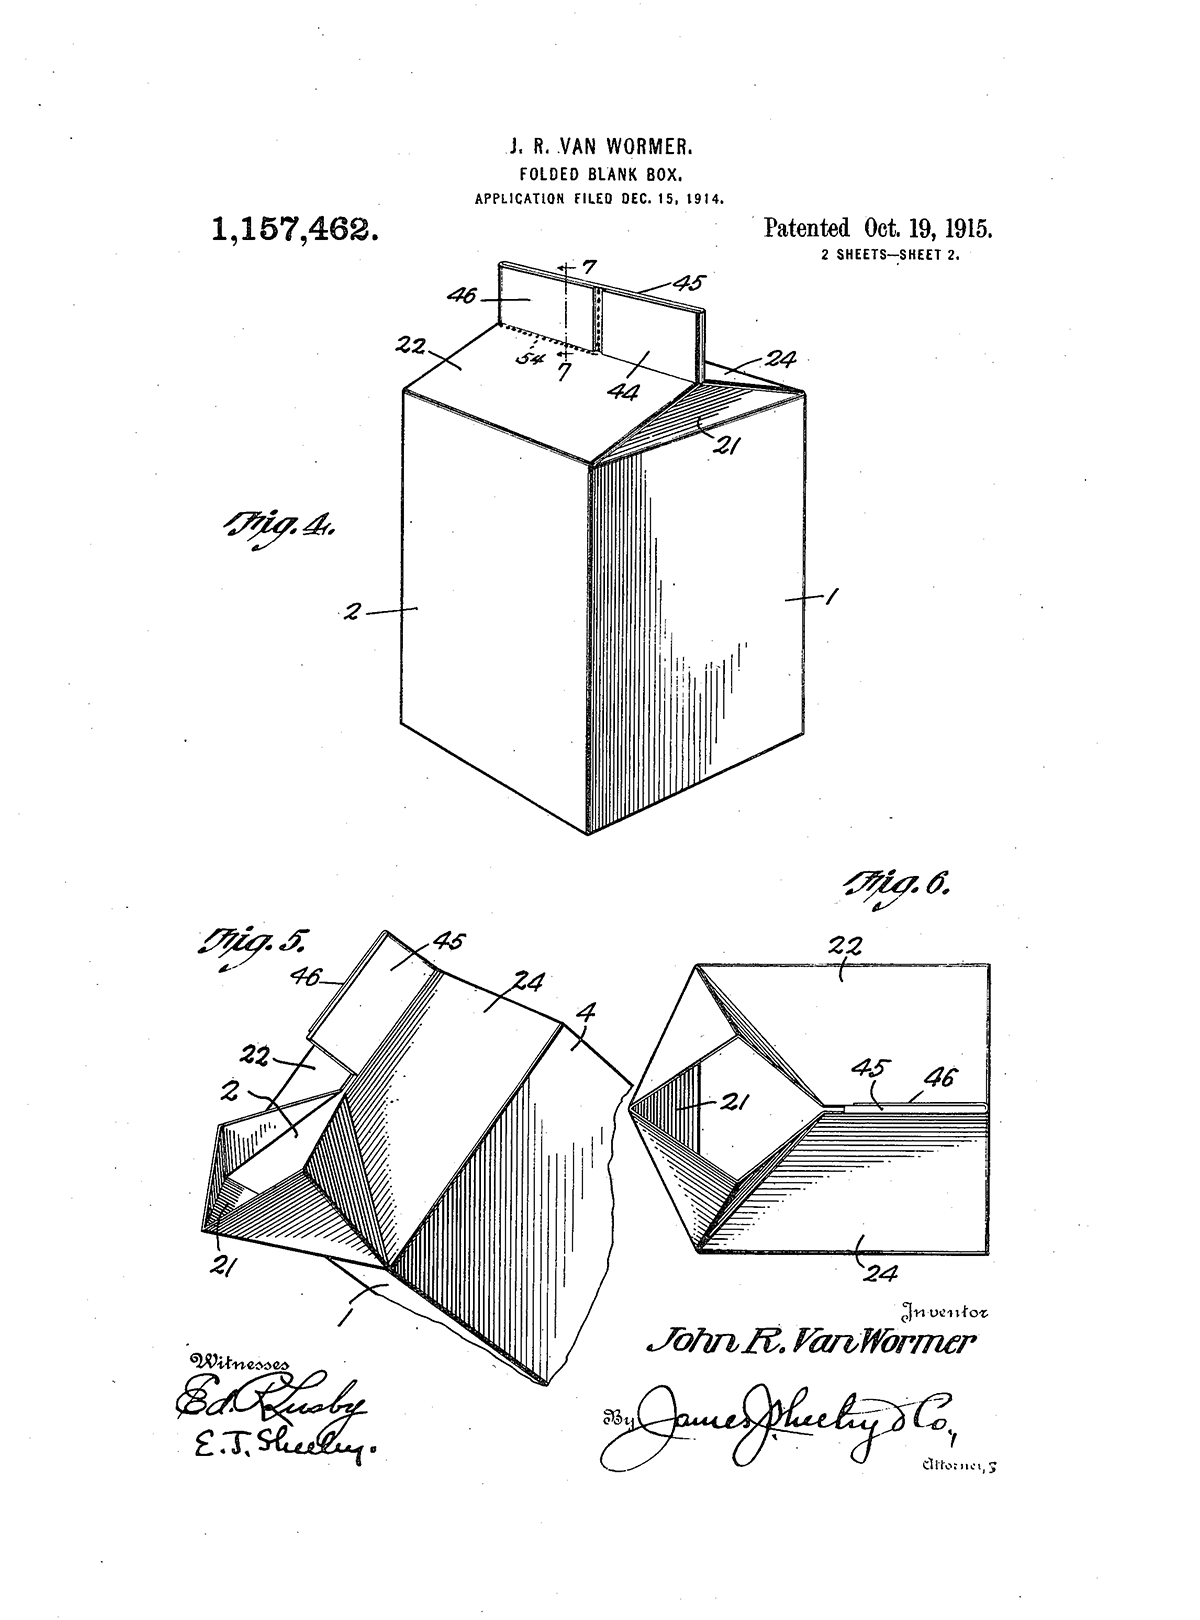  John Van Wormer, Spout for “Folded Blank Box,” Application 1914, U.S. Patent, October 1915